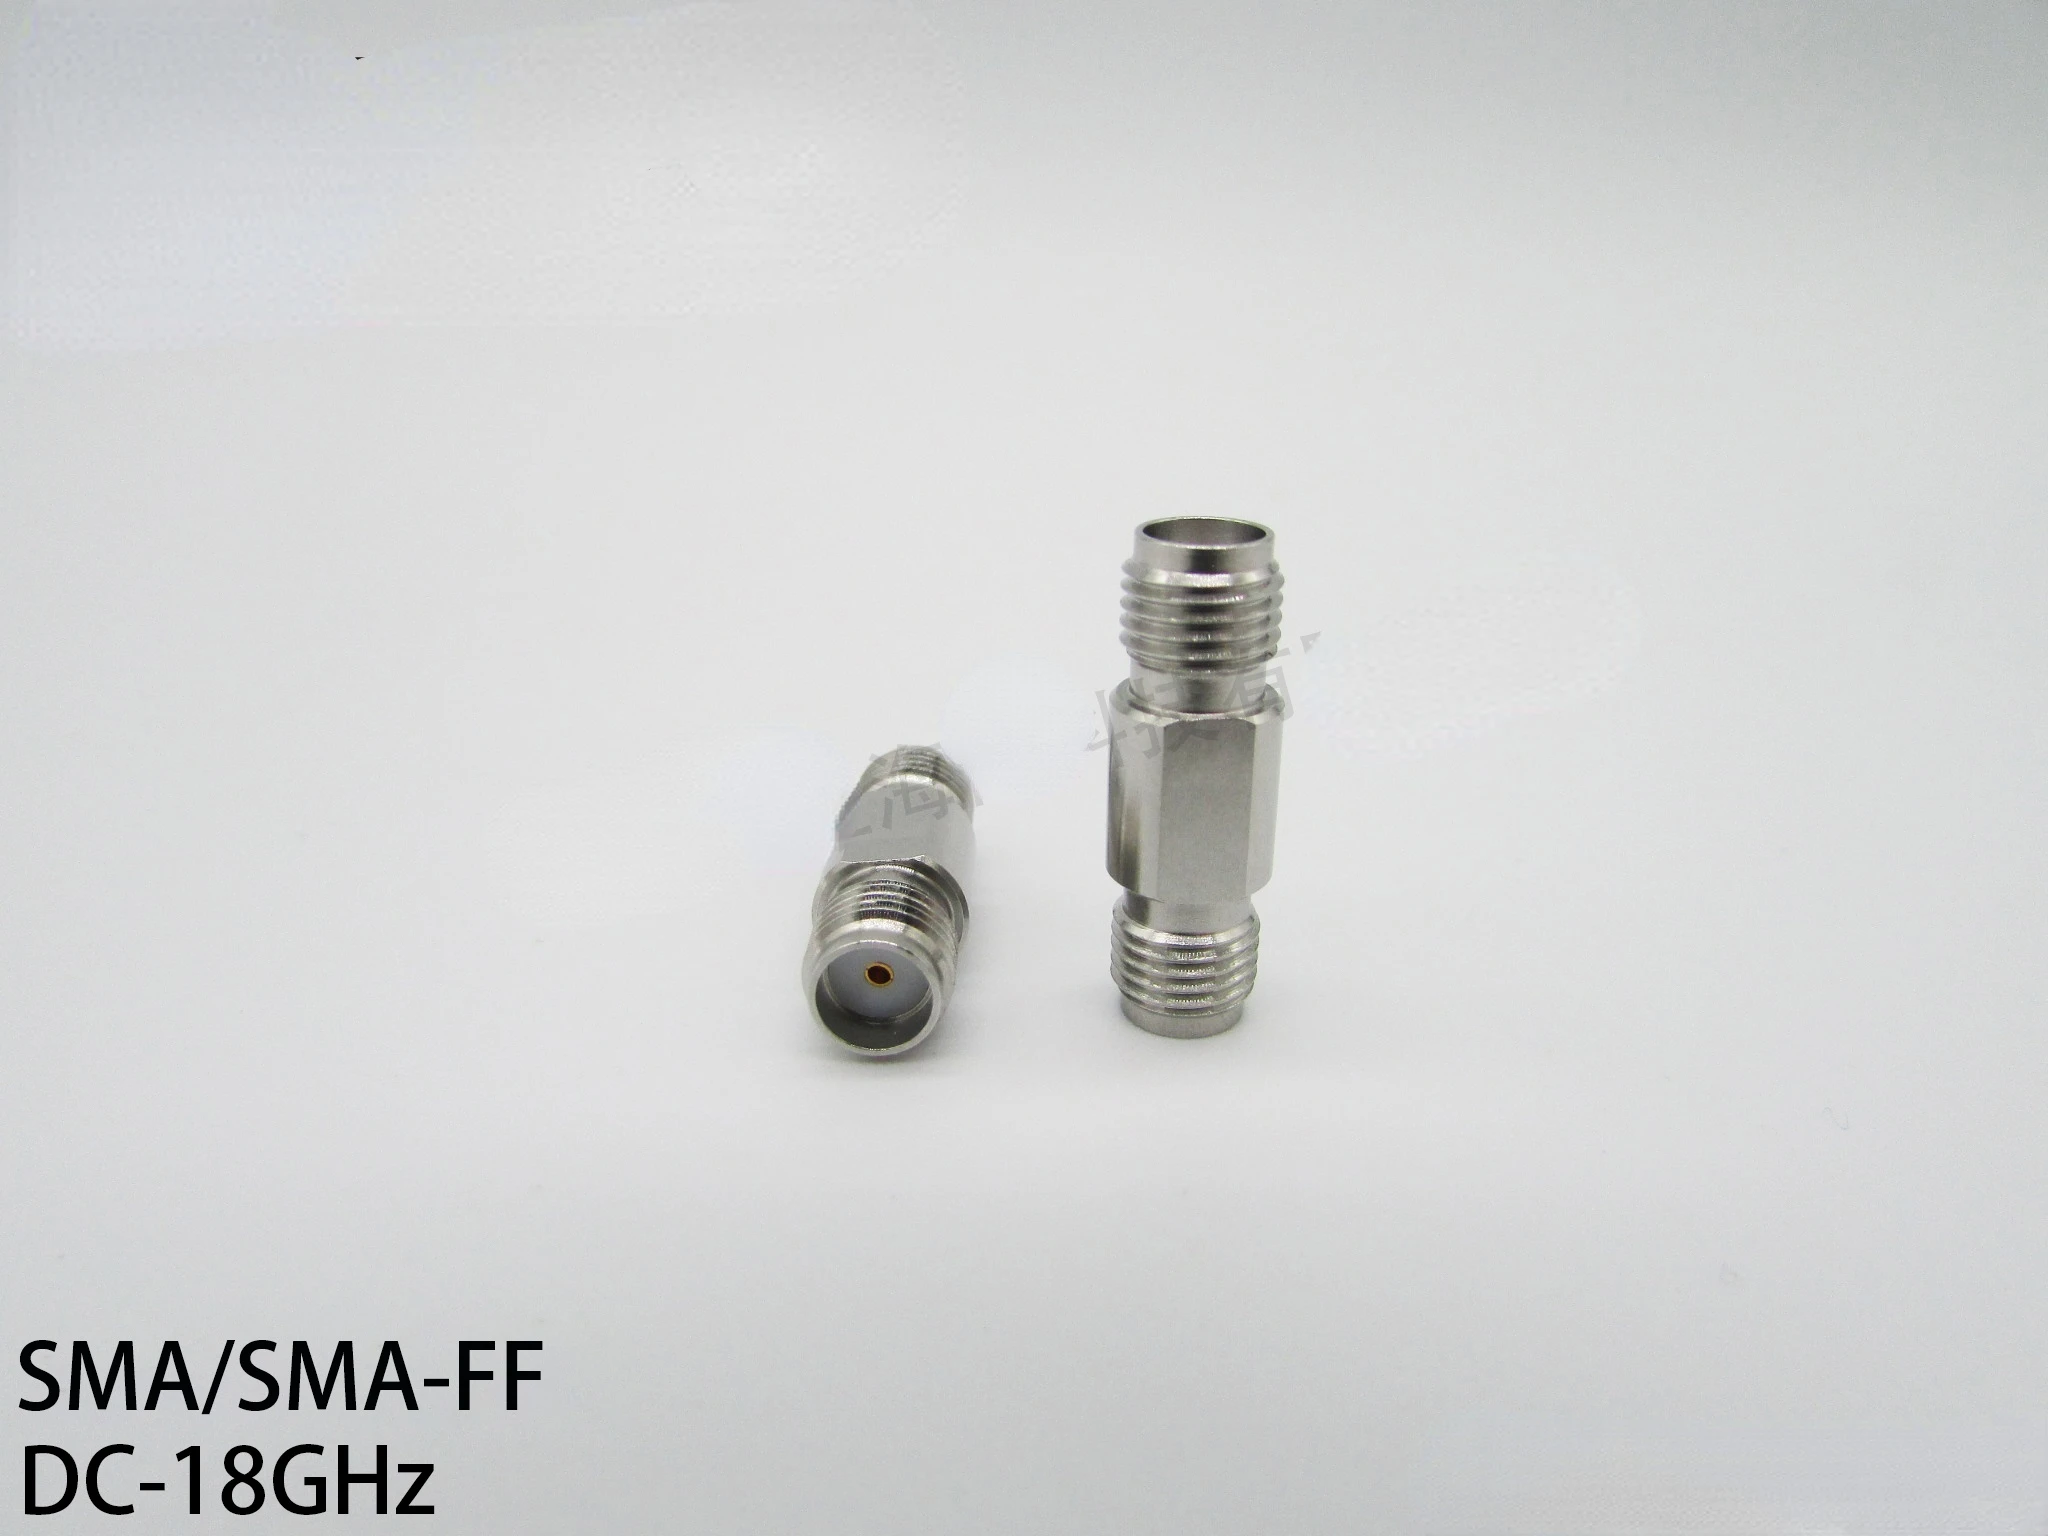 

SHW SMA/SMA-FF DC-18GHz RF Millimeter Wave Adapter SMA Female to SMA Female